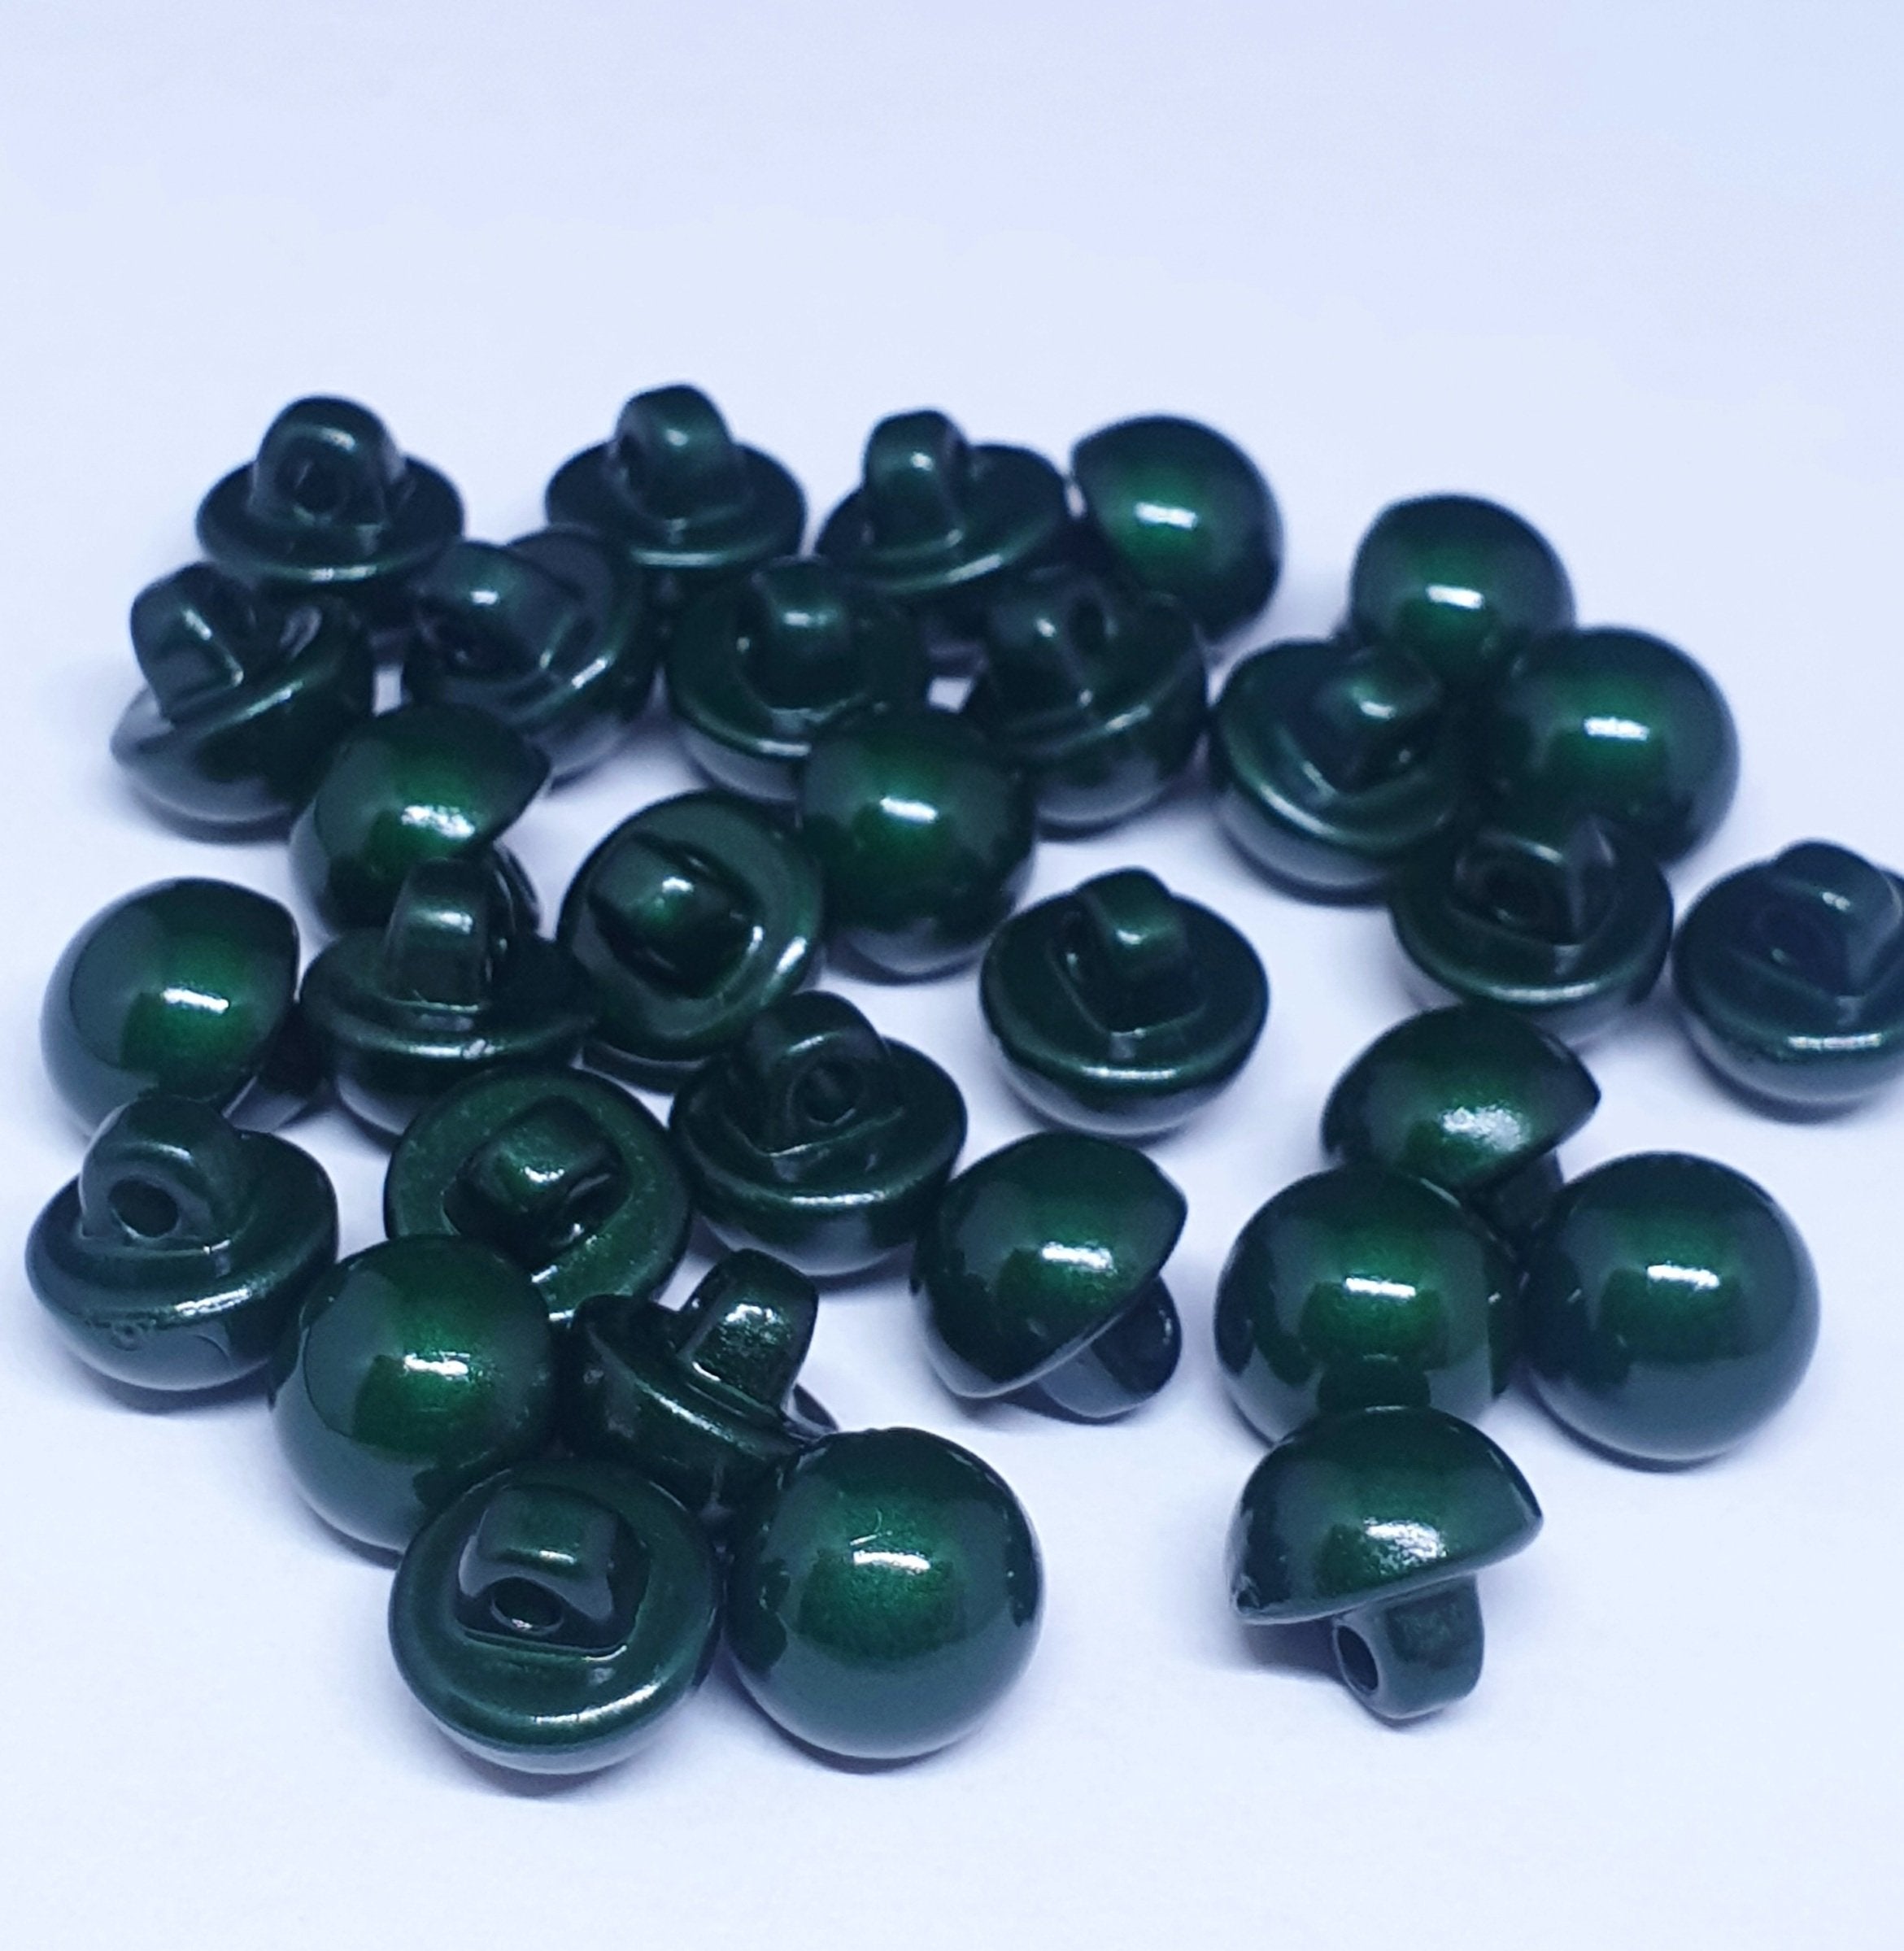 MajorCrafts 30pcs 10mm Dark Green High-Grade Acrylic Small Round Sewing Mushroom Shank Buttons